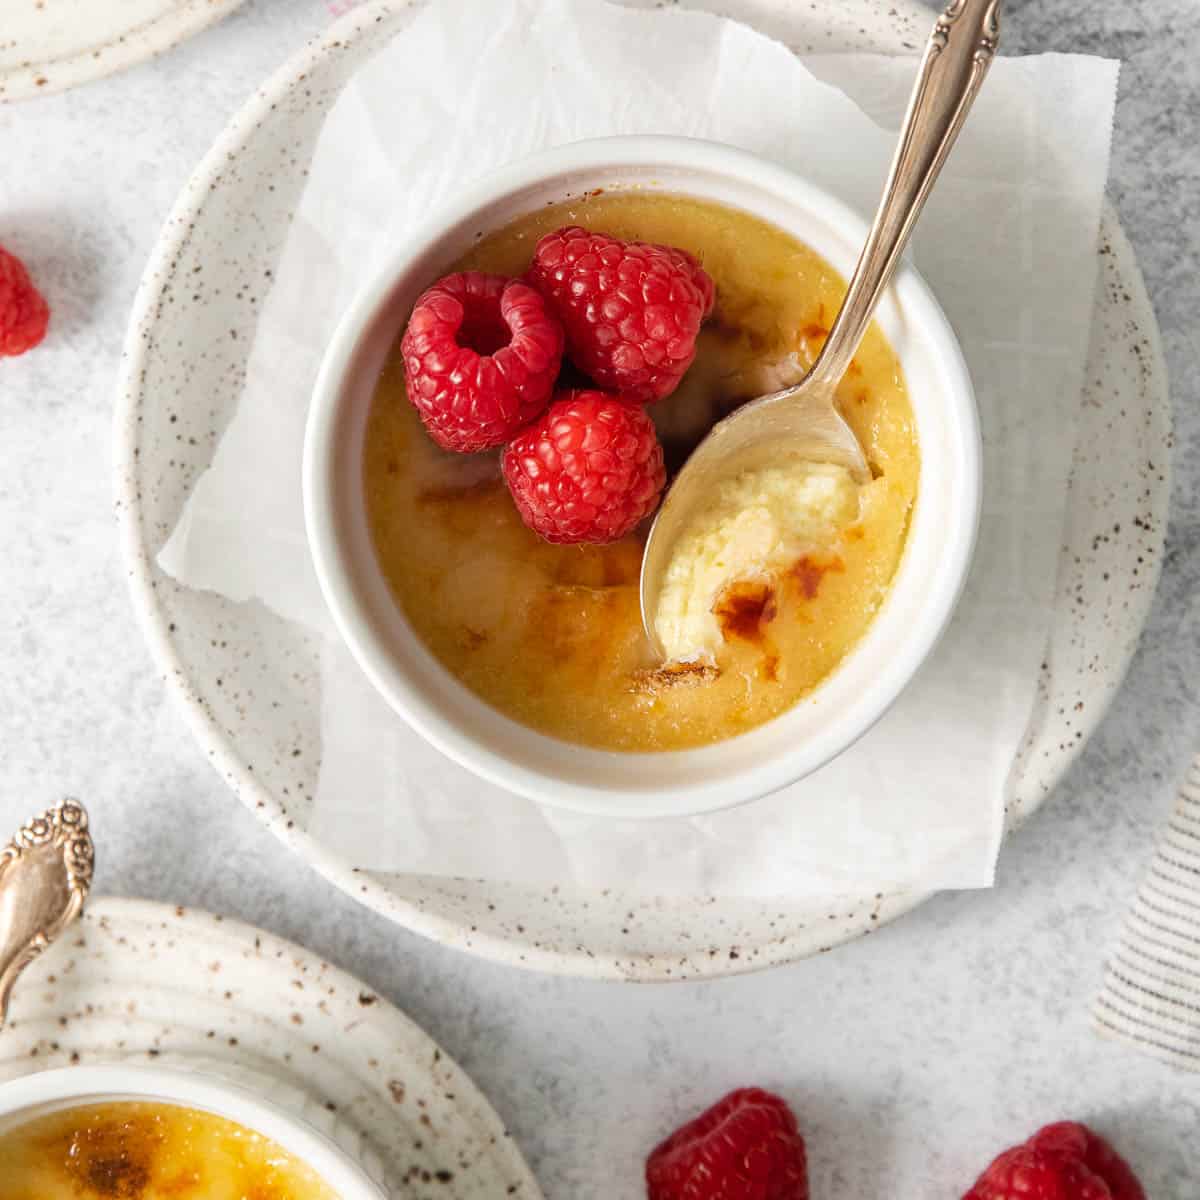 Dairy-free creme brulee in a ramekin, with raspberries on top and a spoon dipping into the ramekin